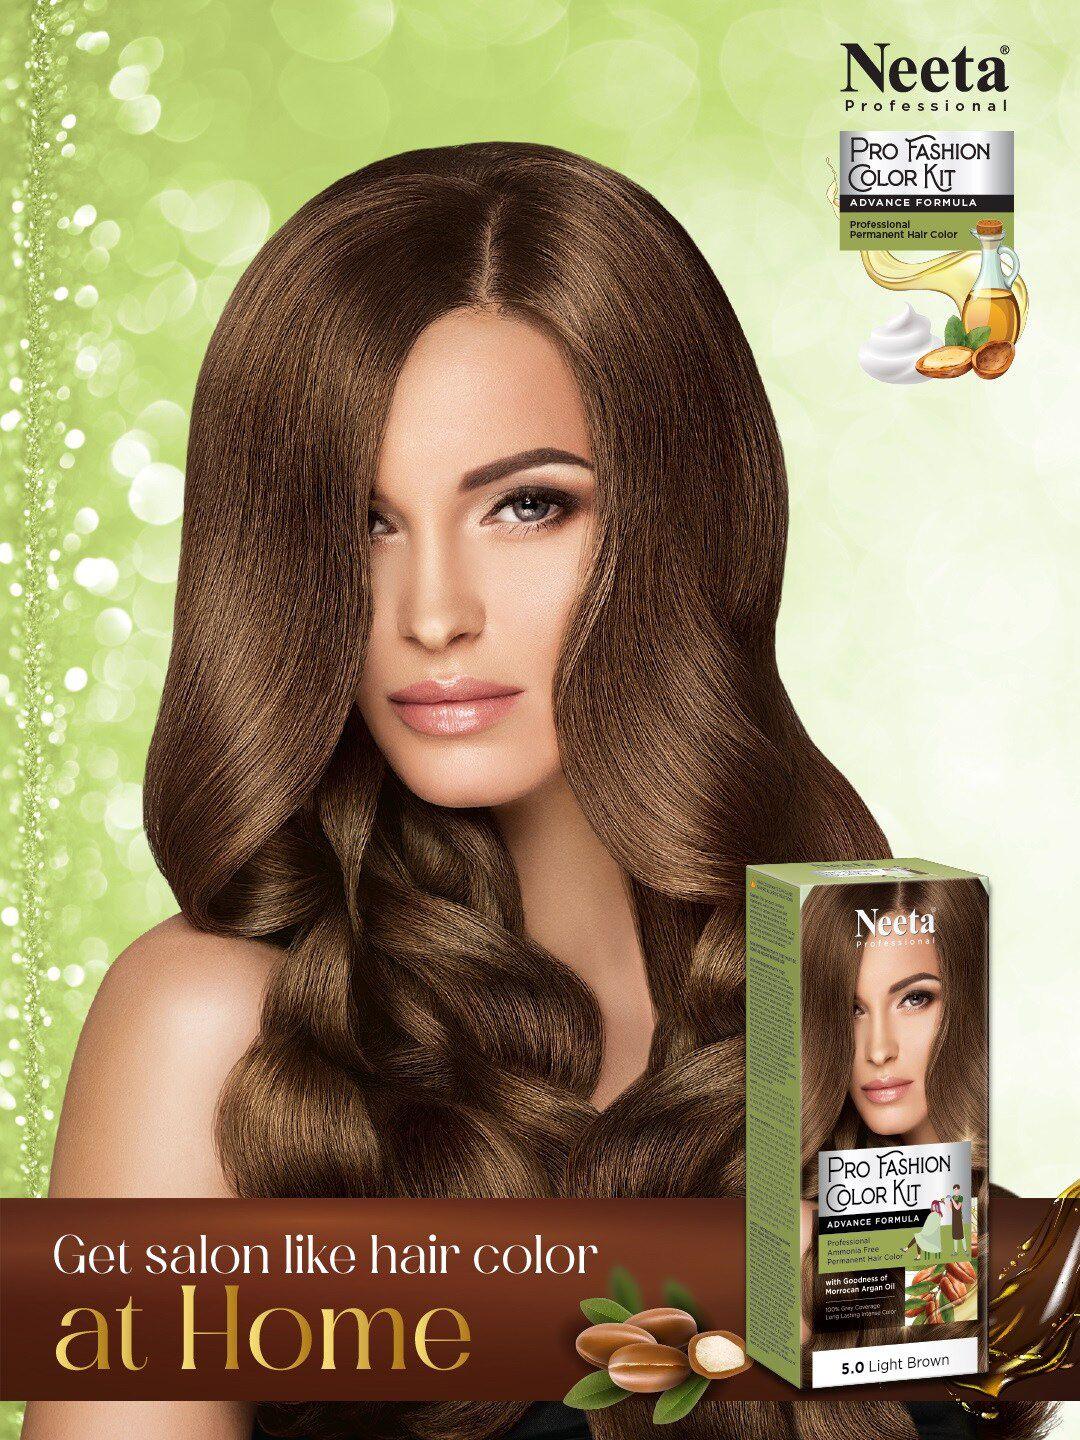 neeta professional pro fashion permanent hair color kit 100g - light brown 5.0